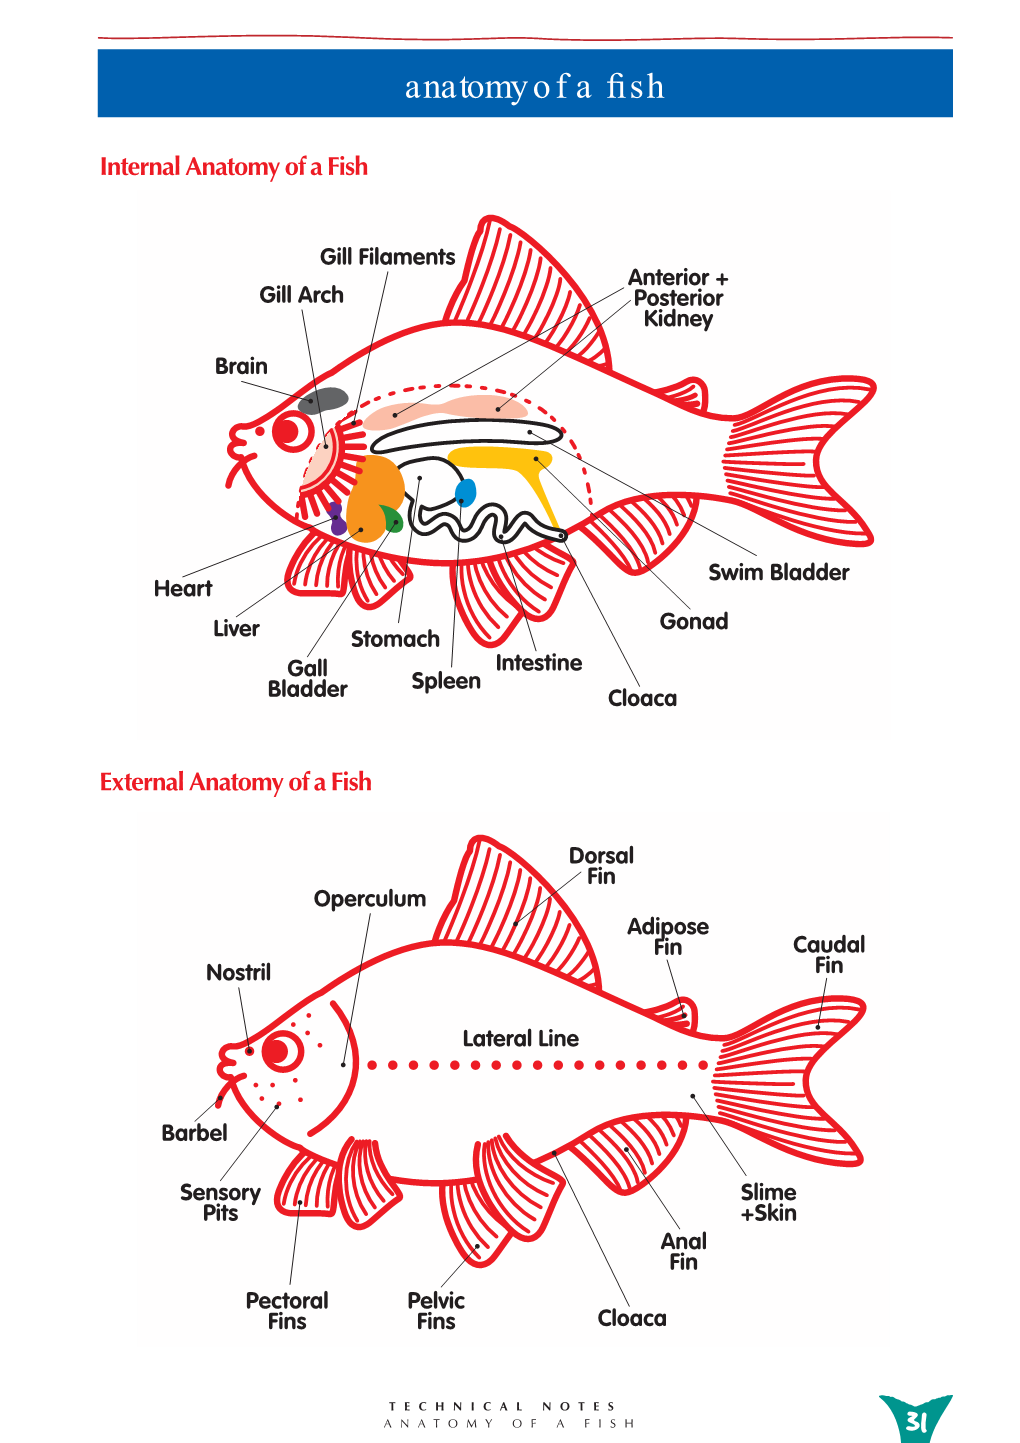 Anatomy of a Fish